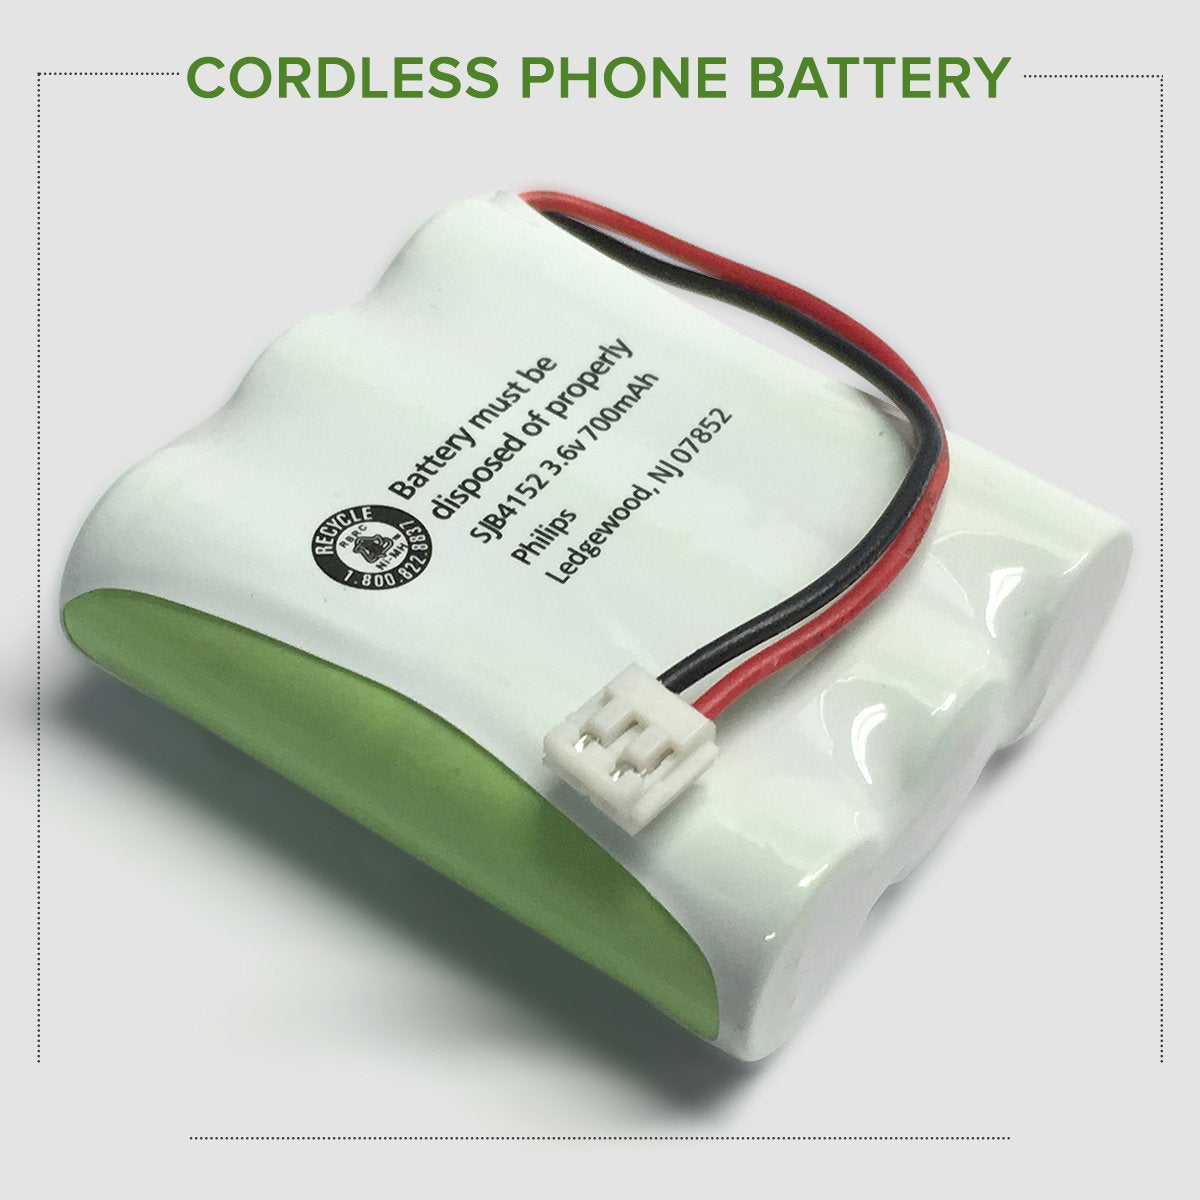 GE 5-2593 Cordless Phone Battery